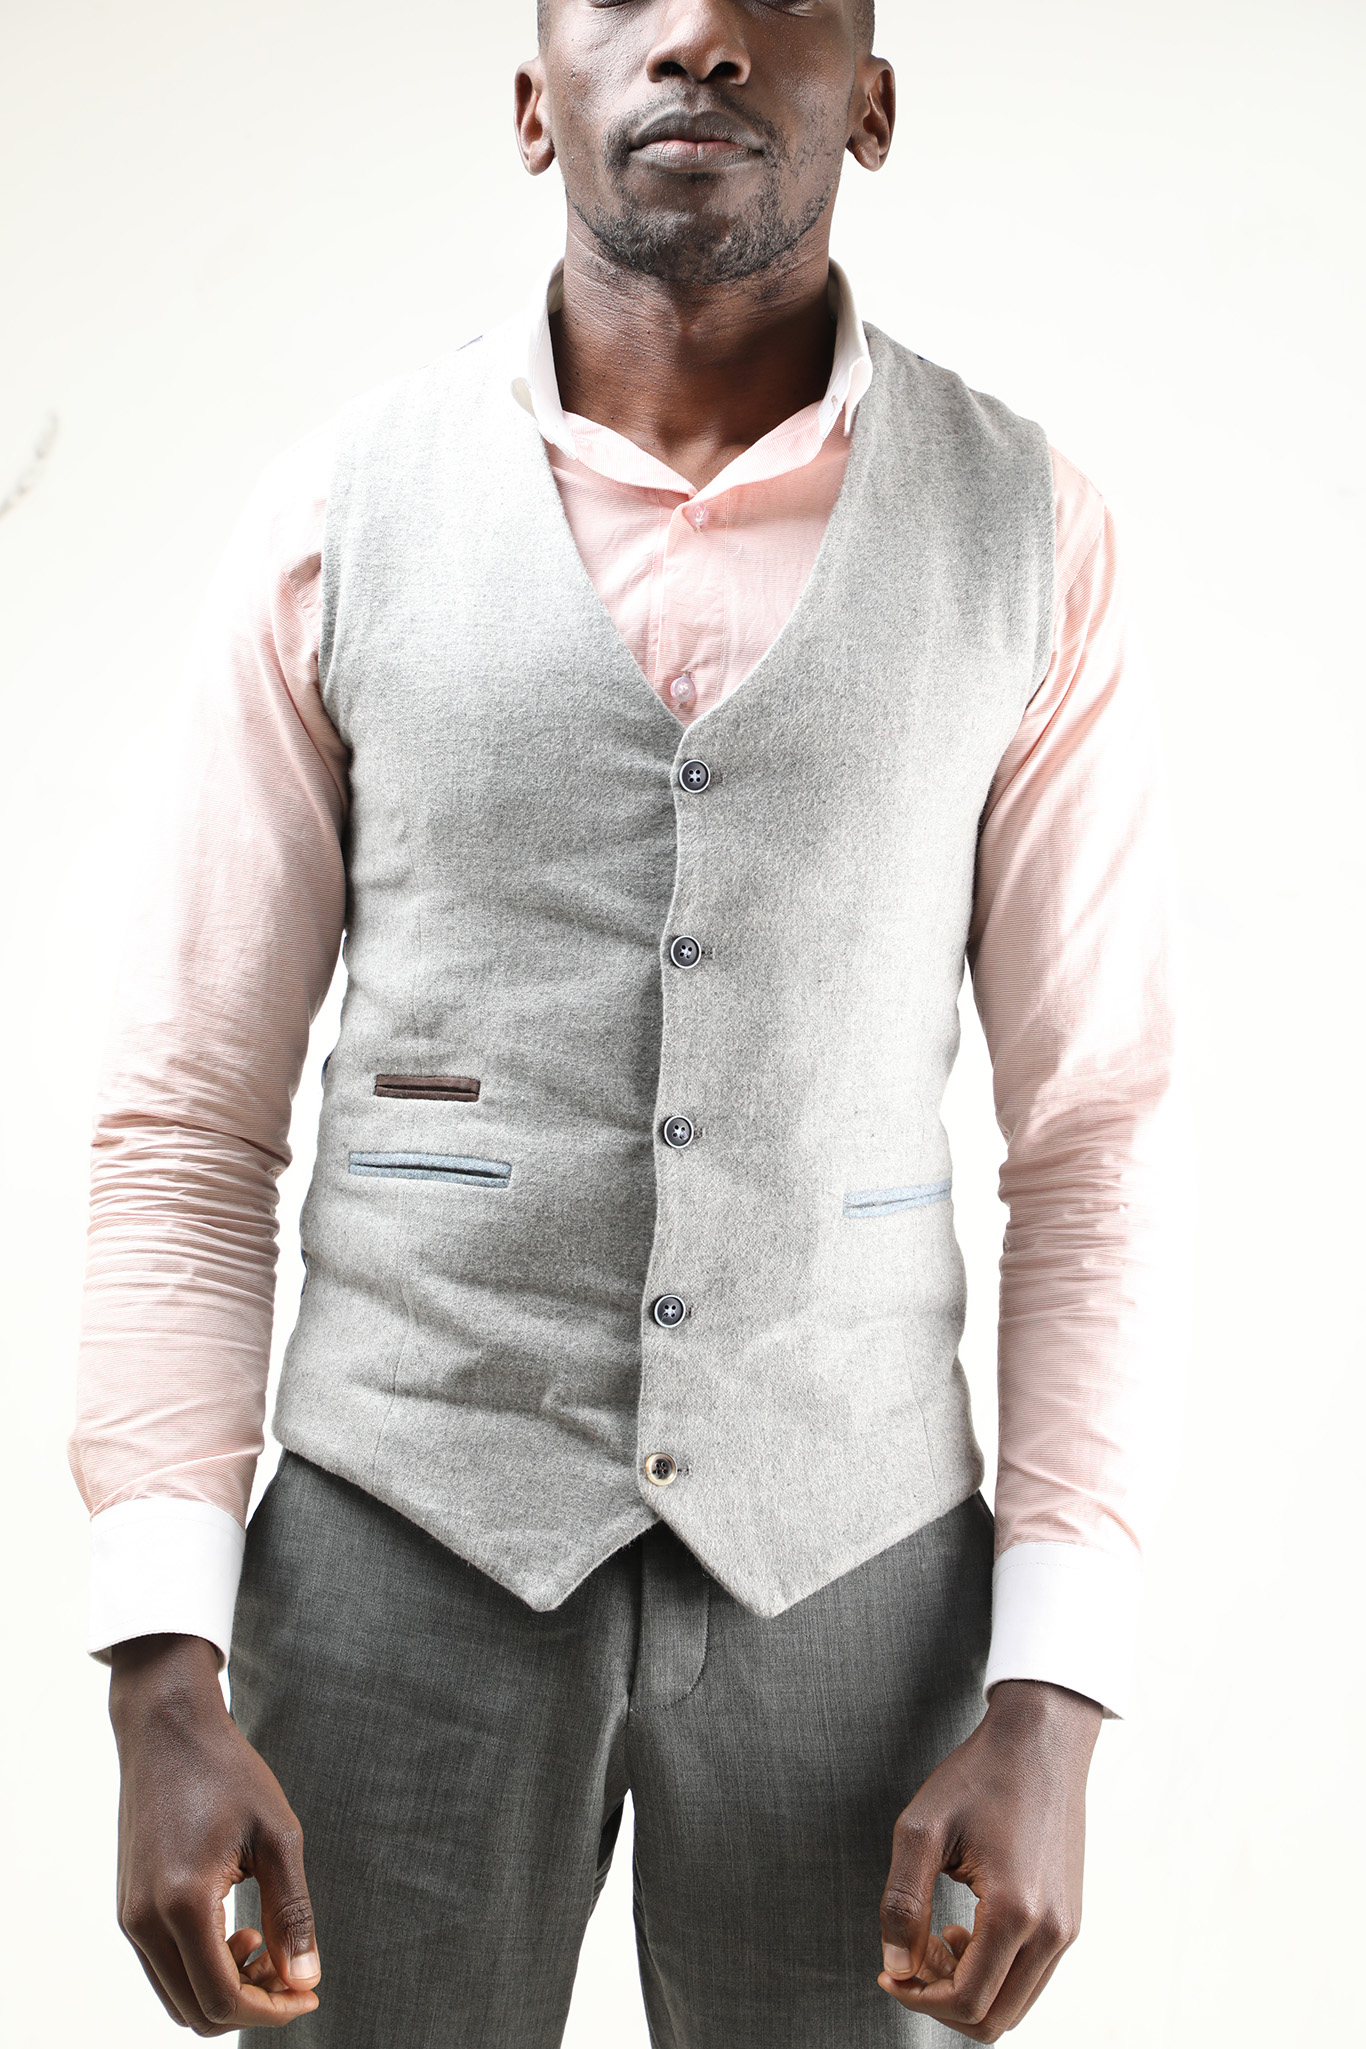 Grey wool waistcoat for men Nairobi Kenya